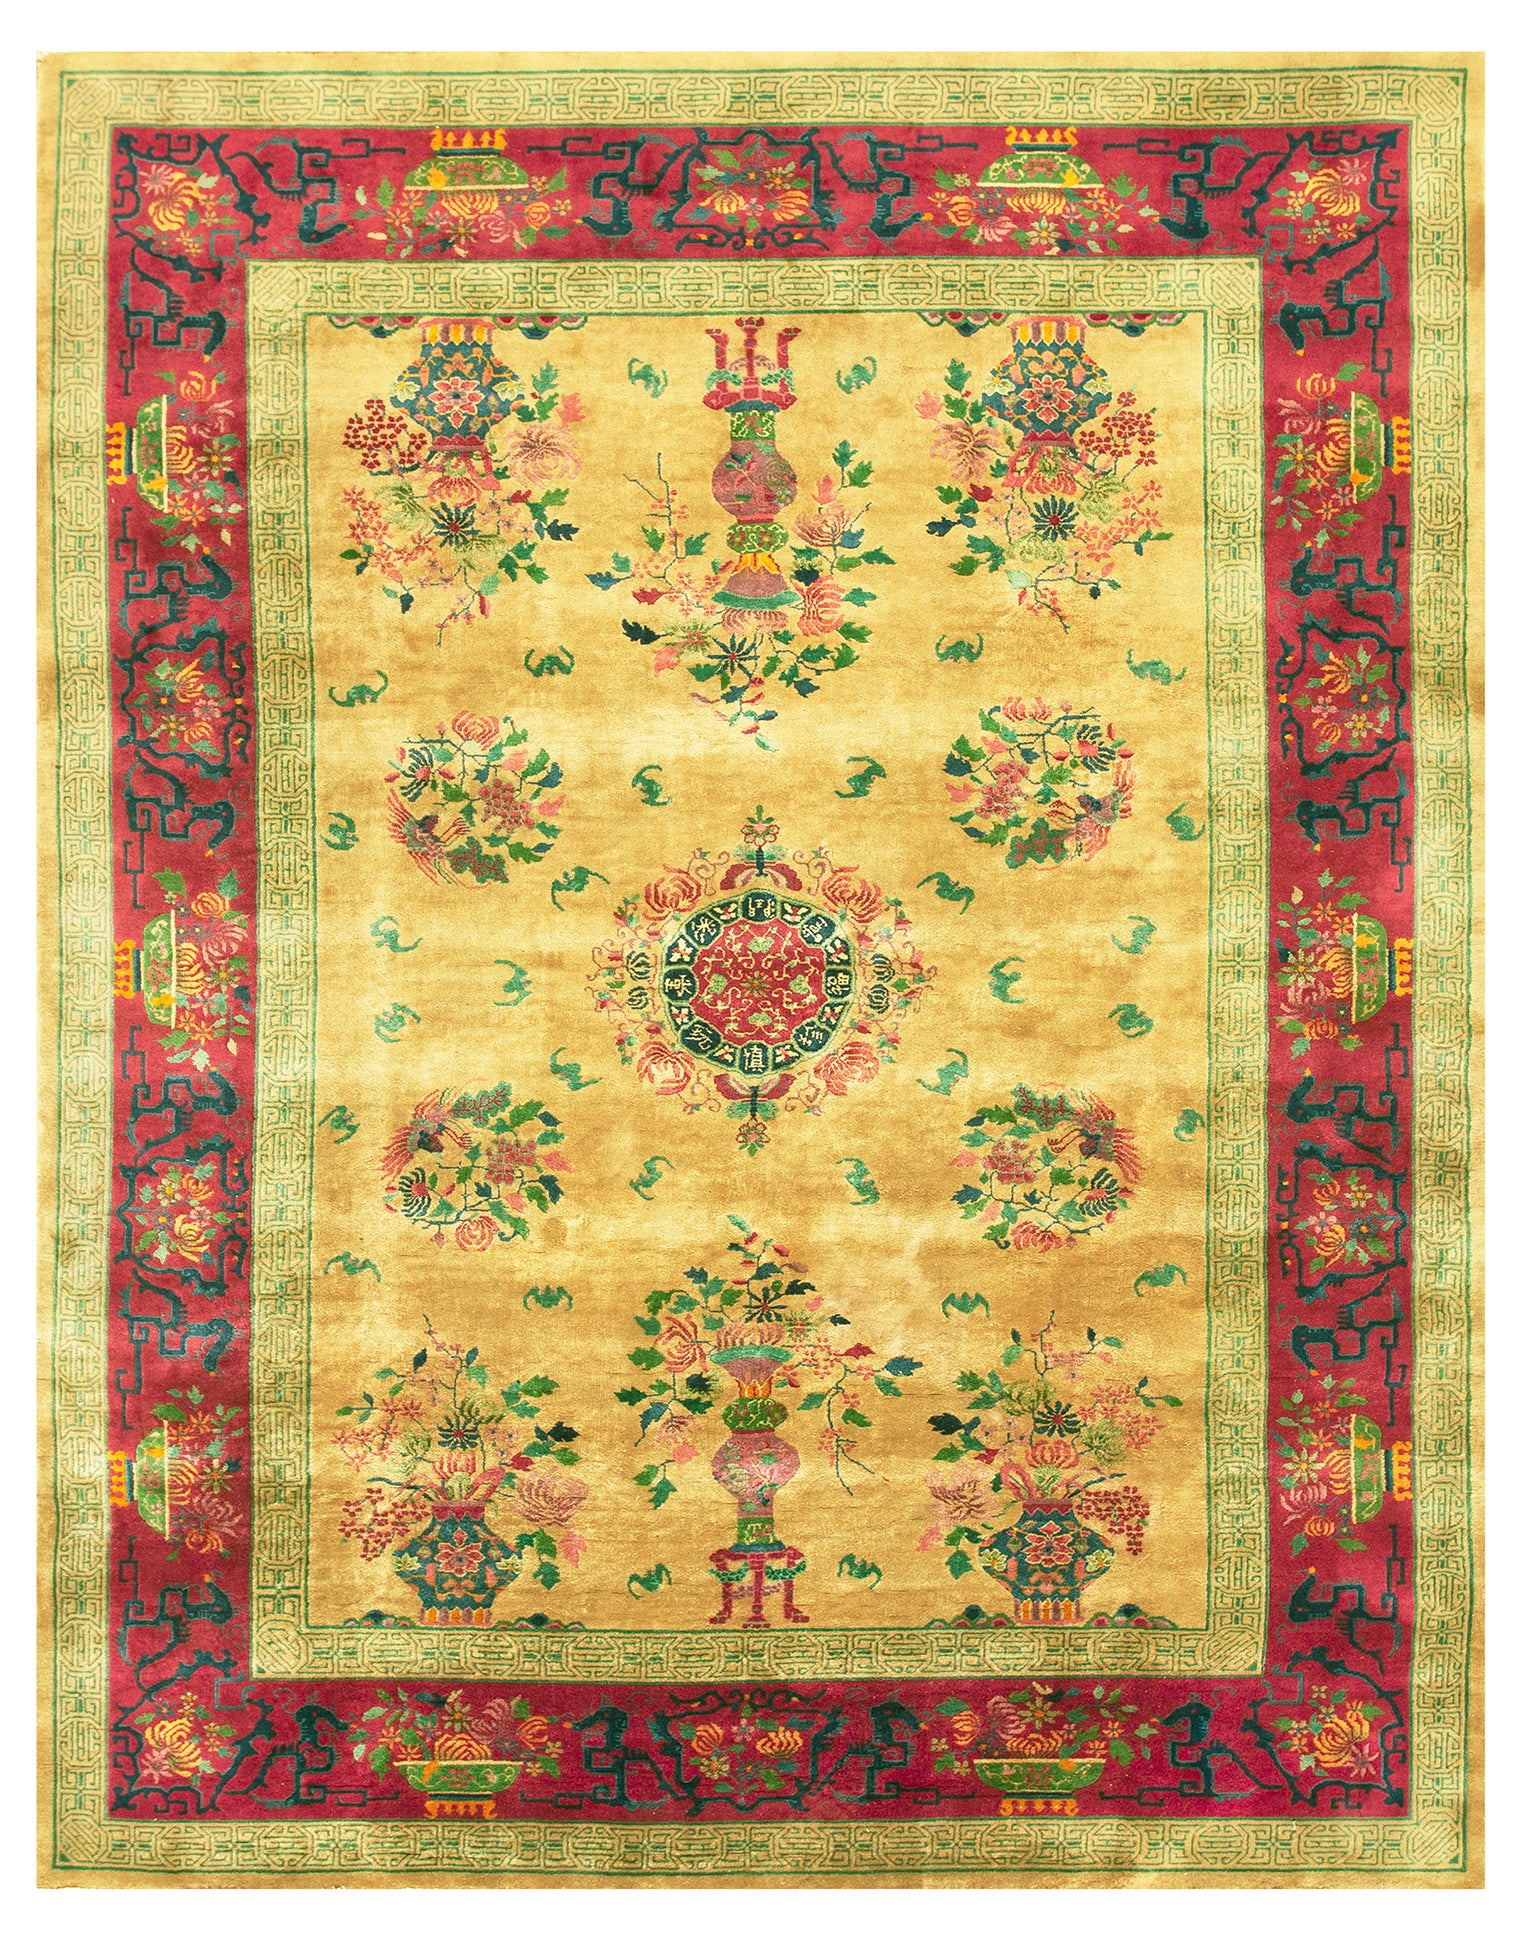 1920s Chinese Art Deco Carpet (  8'9" x 11'6" - 267 x 351 )